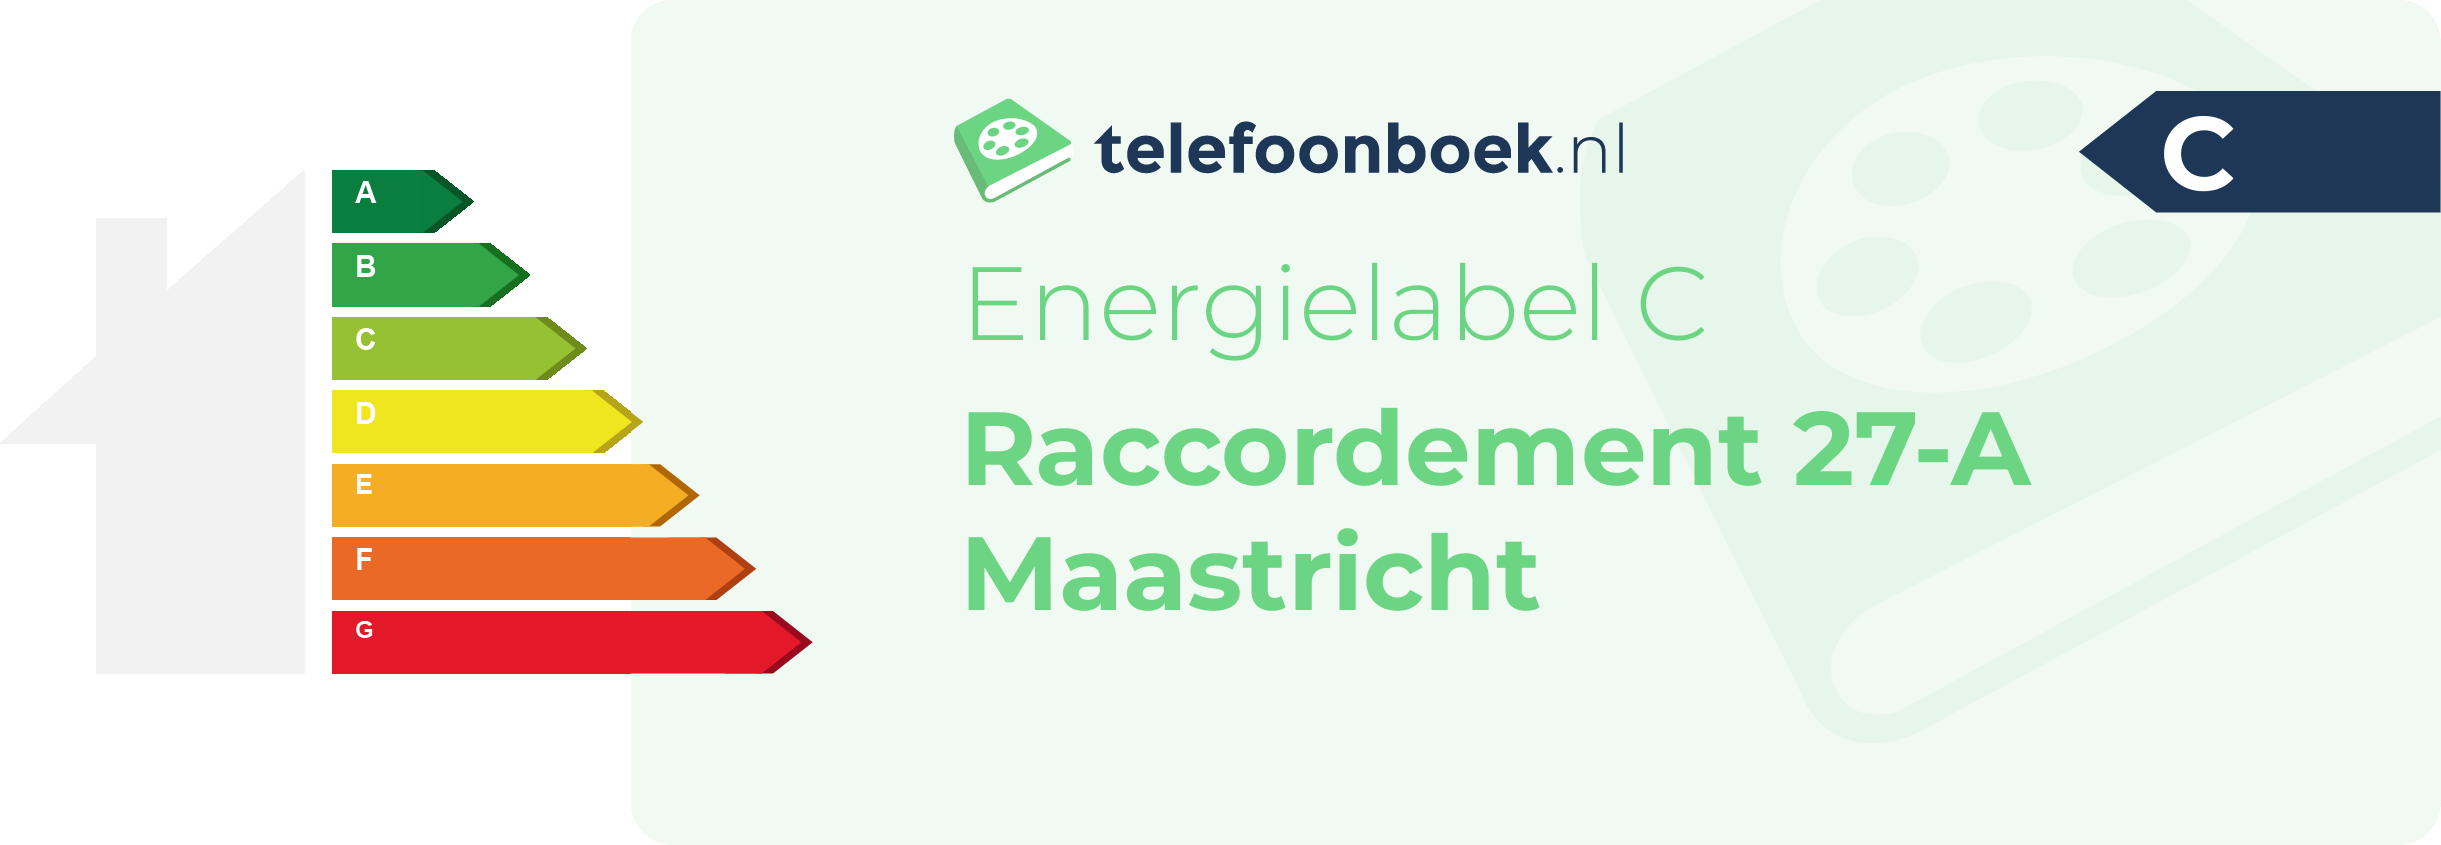 Energielabel Raccordement 27-A Maastricht